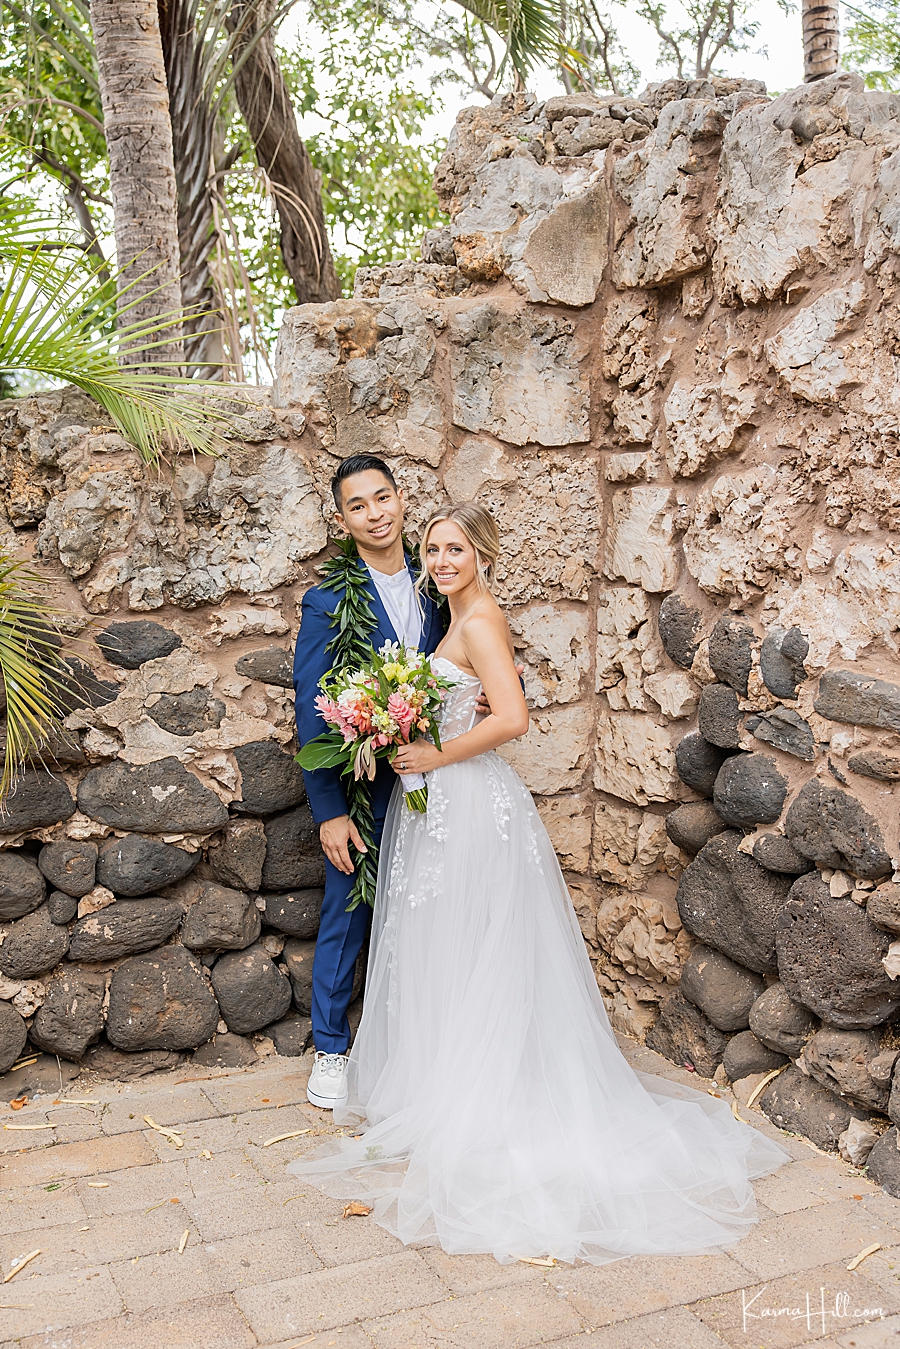 dreamy wedding in hawaii